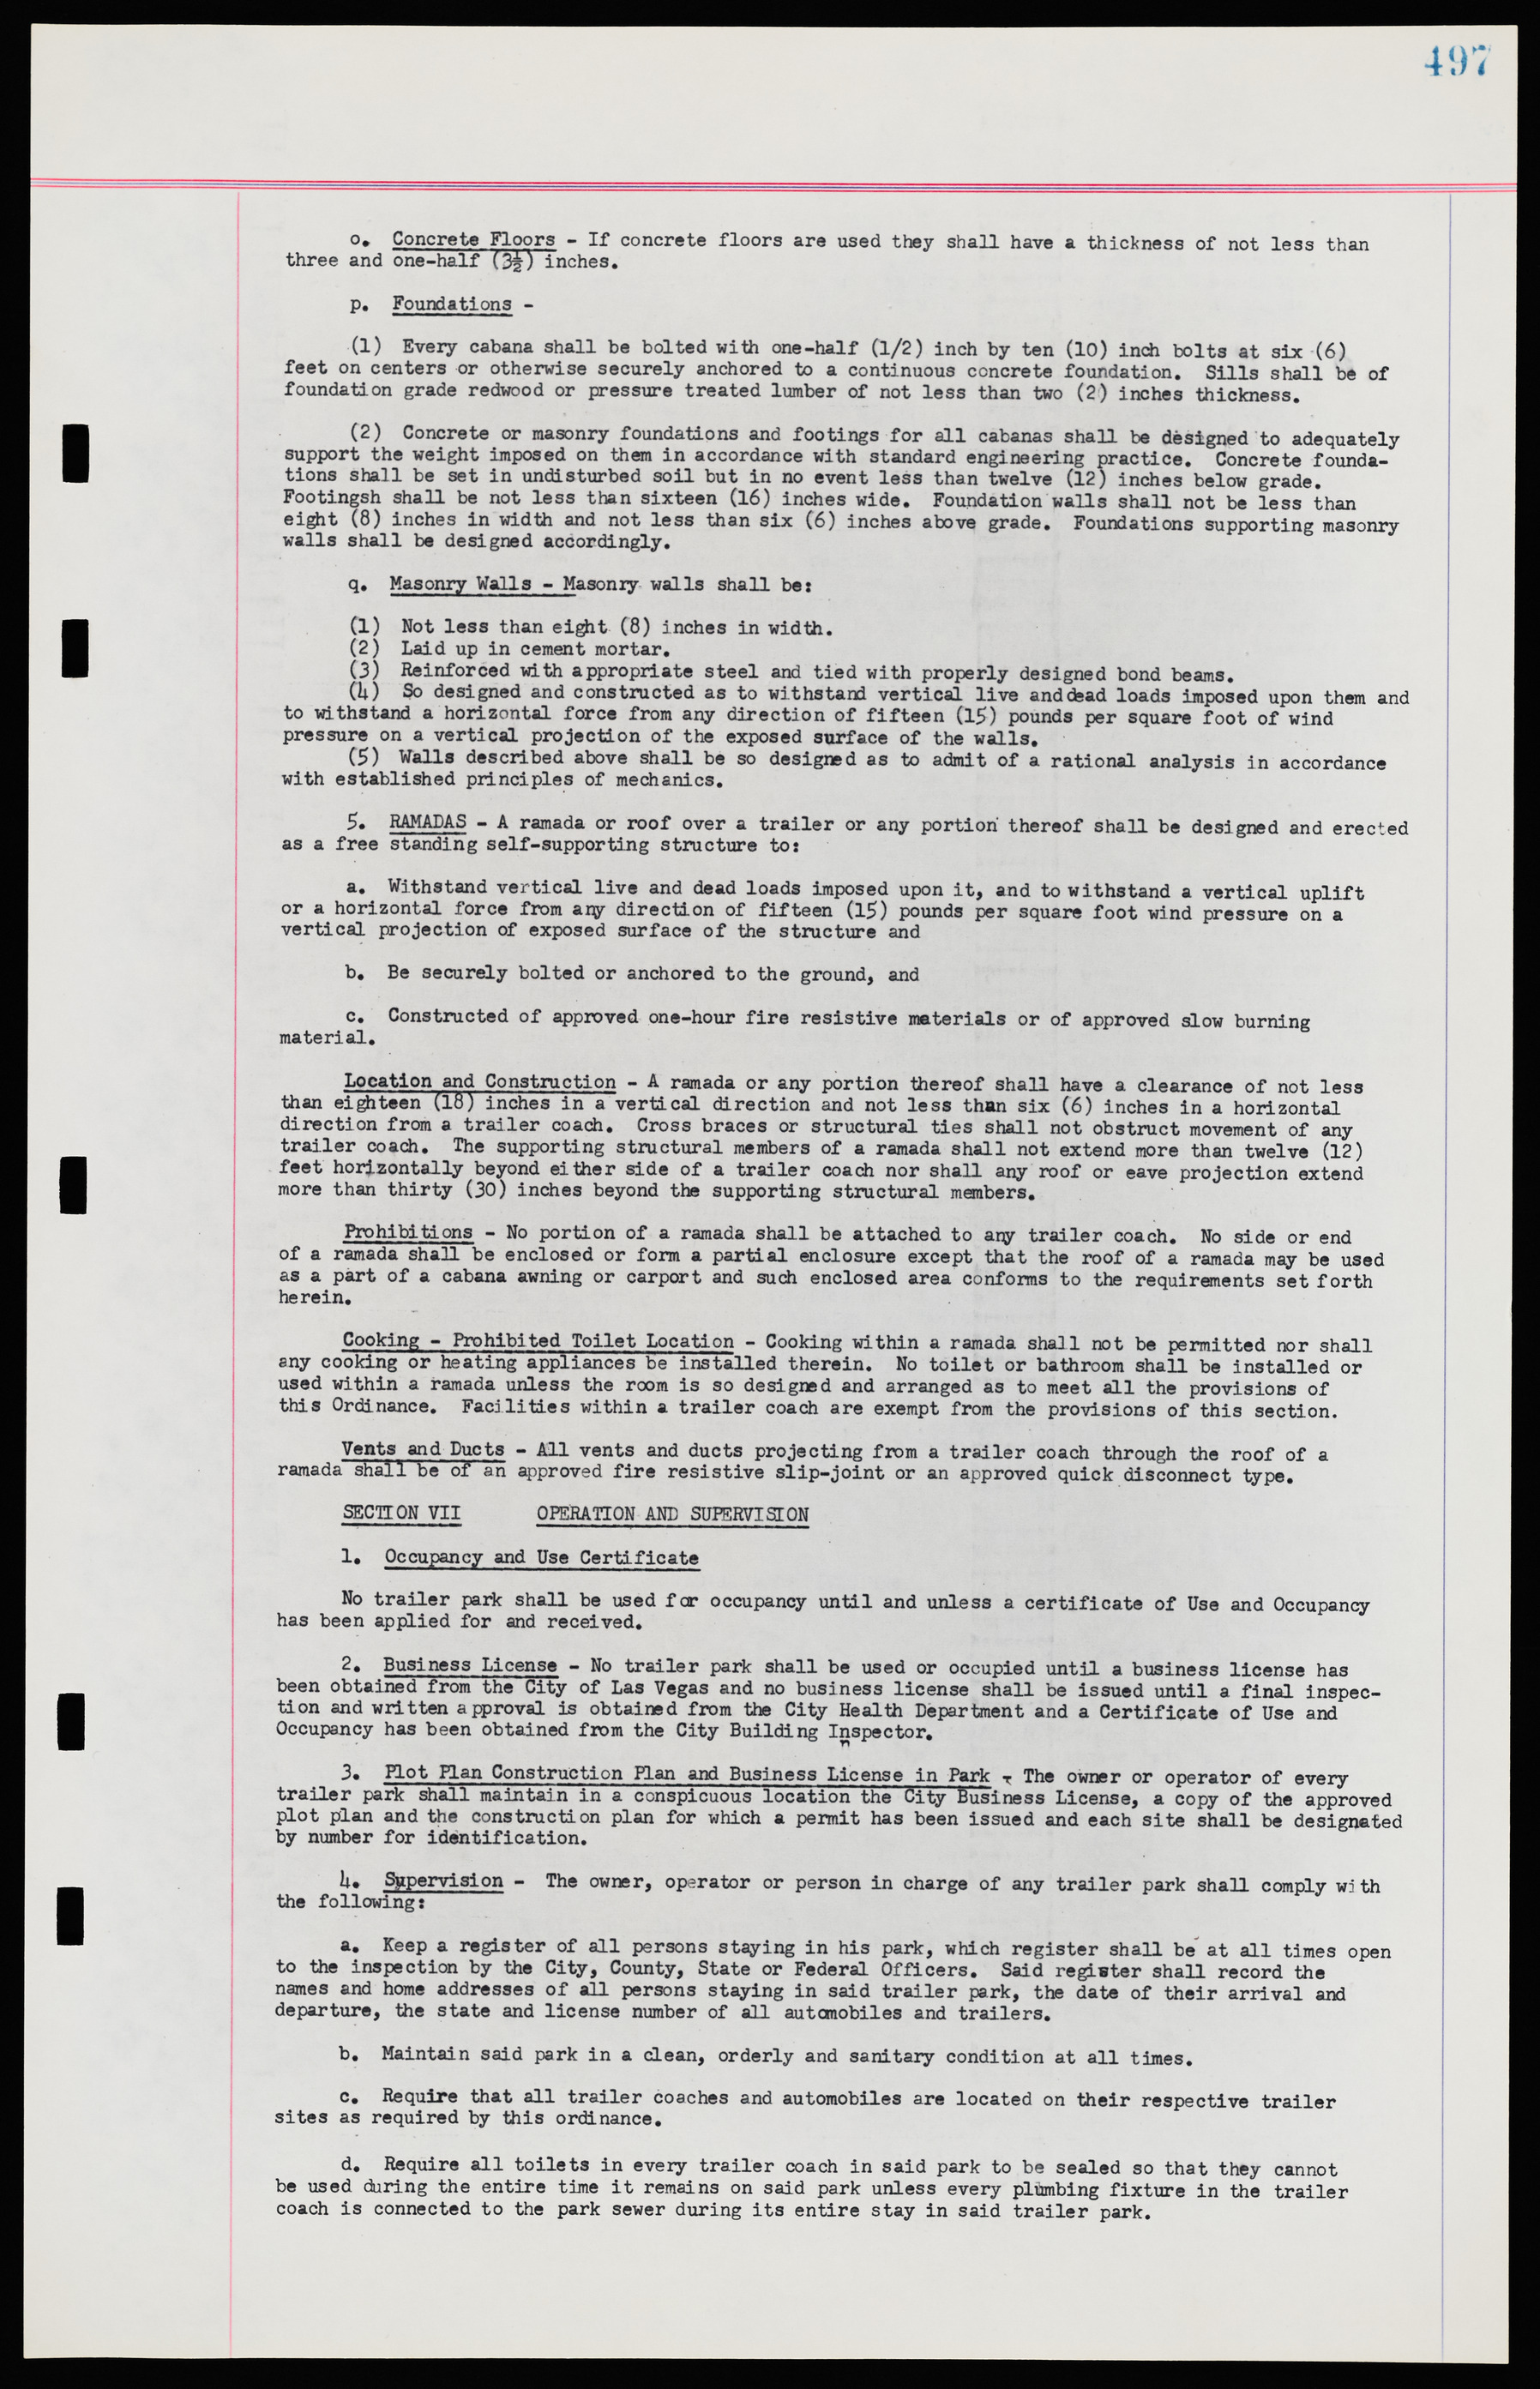 Las Vegas City Ordinances, November 13, 1950 to August 6, 1958, lvc000015-505